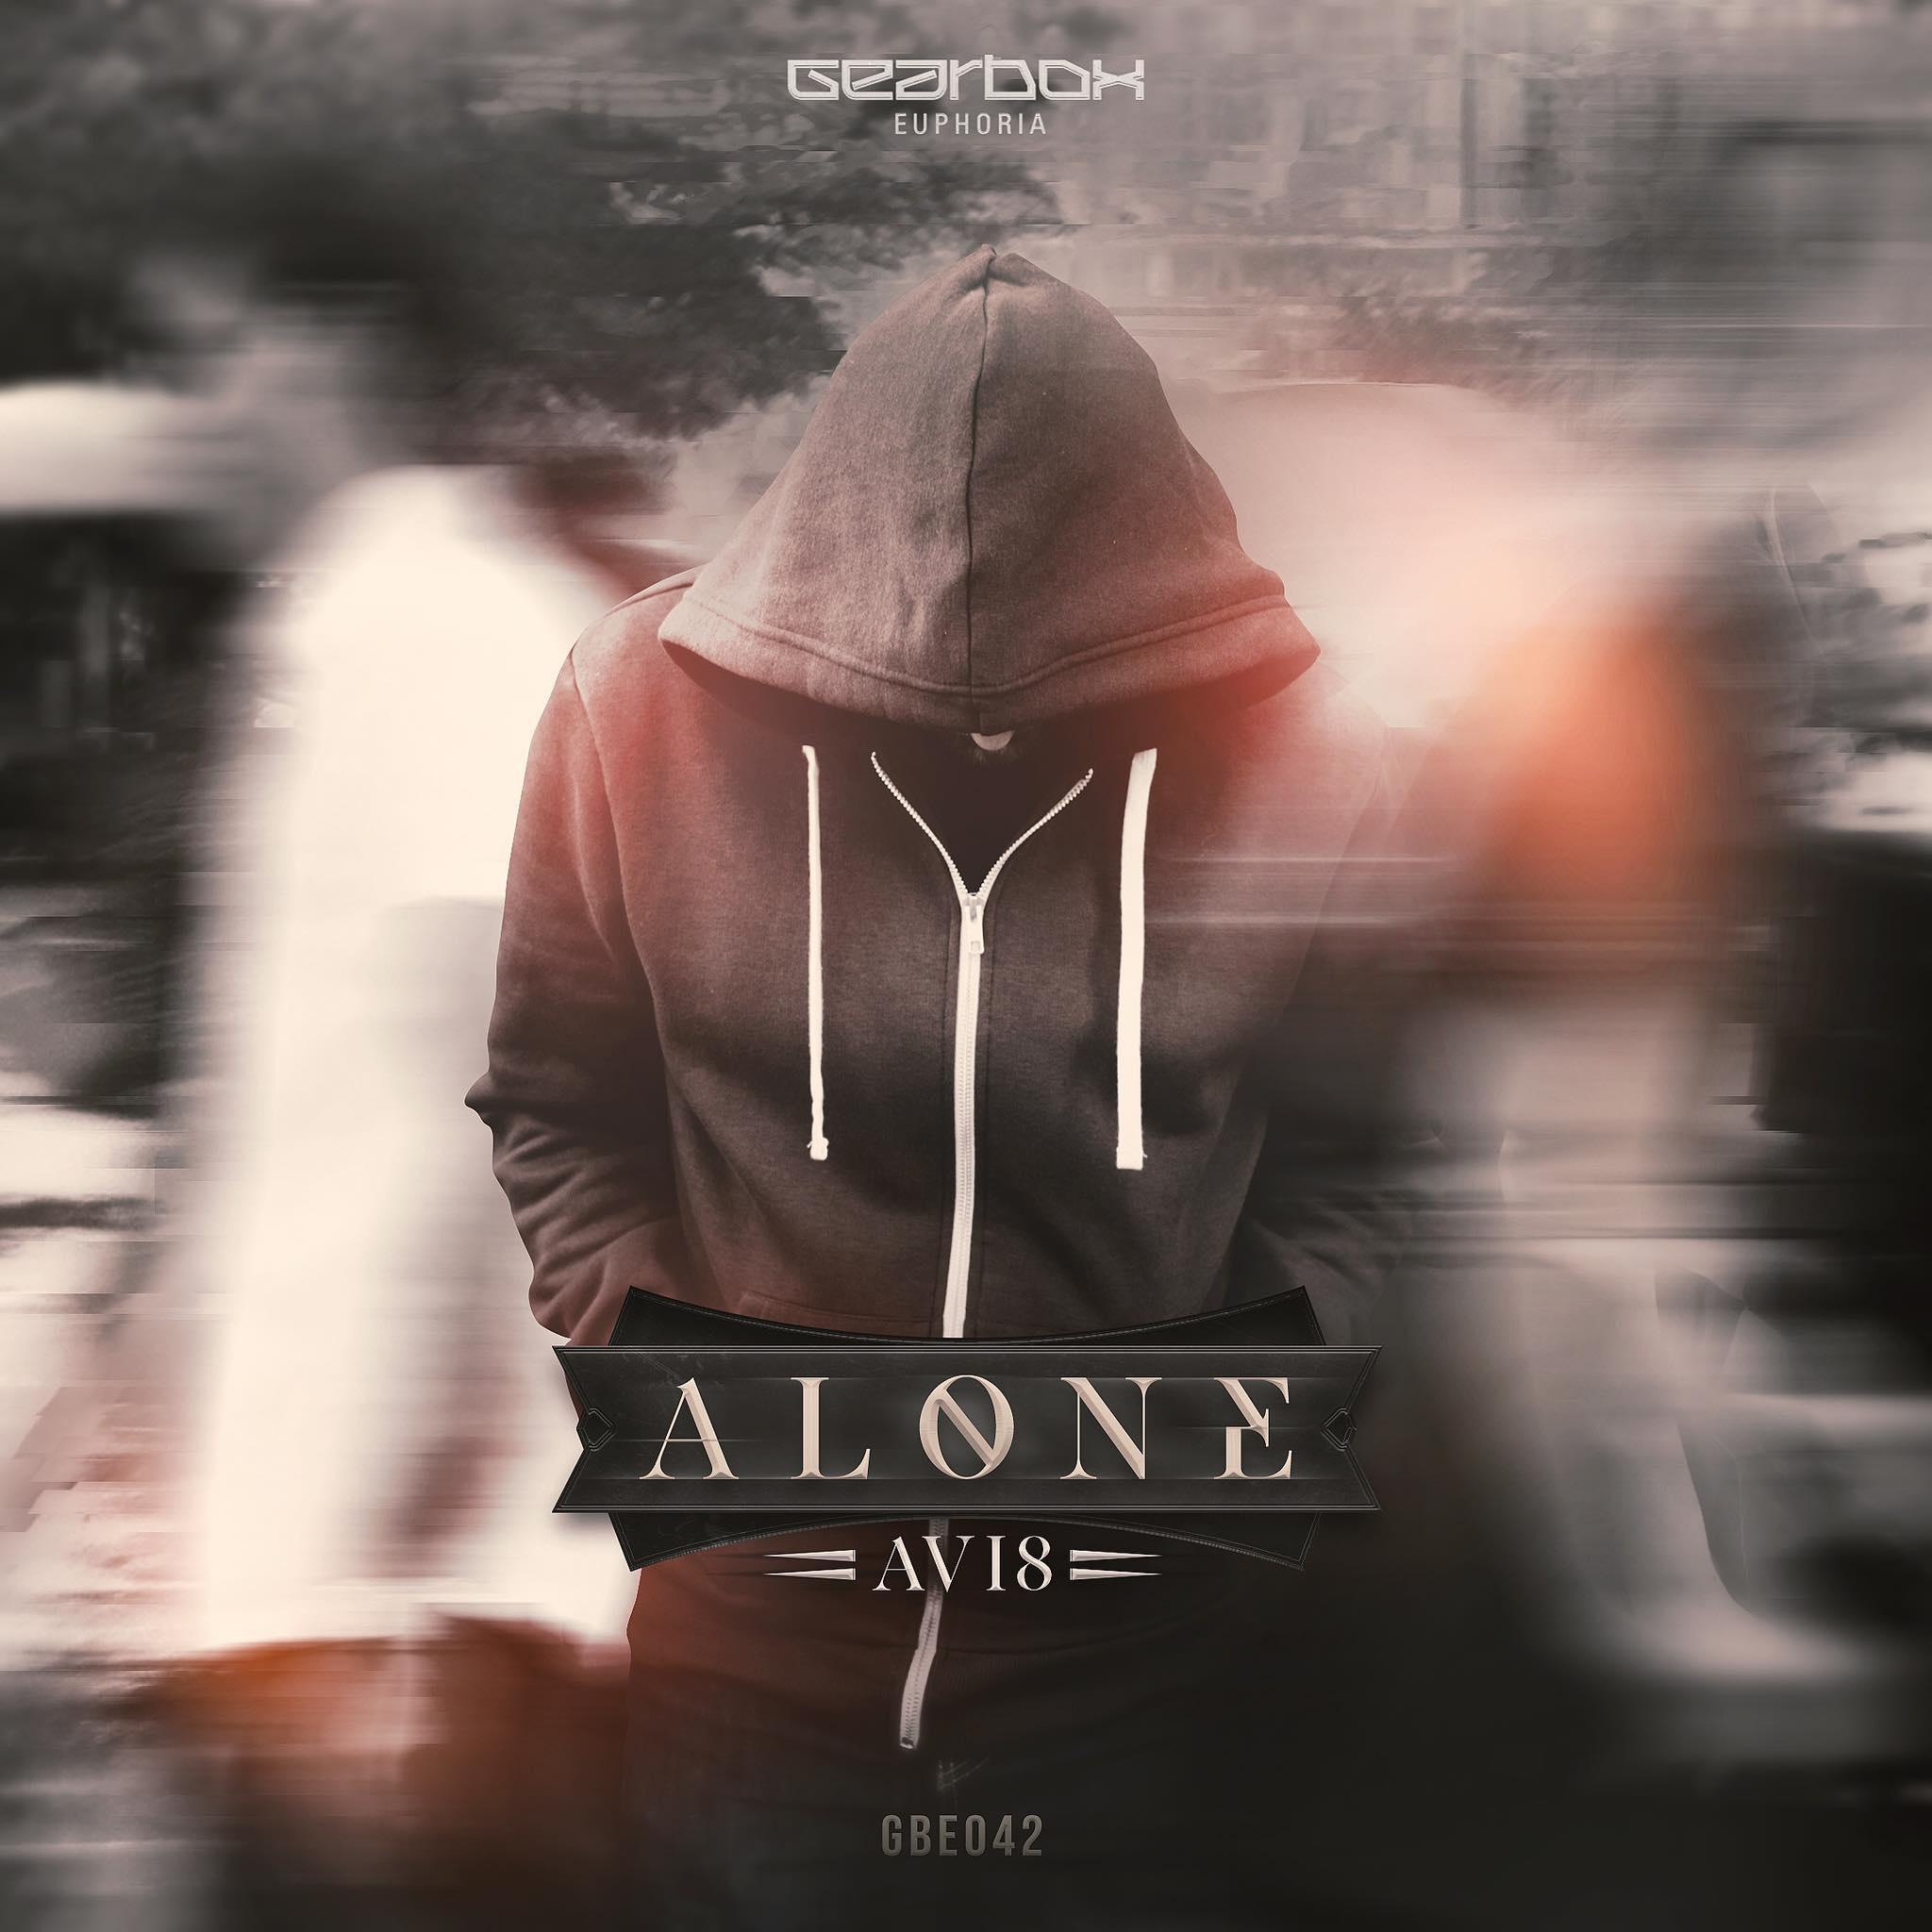 Alone (Original Mix)